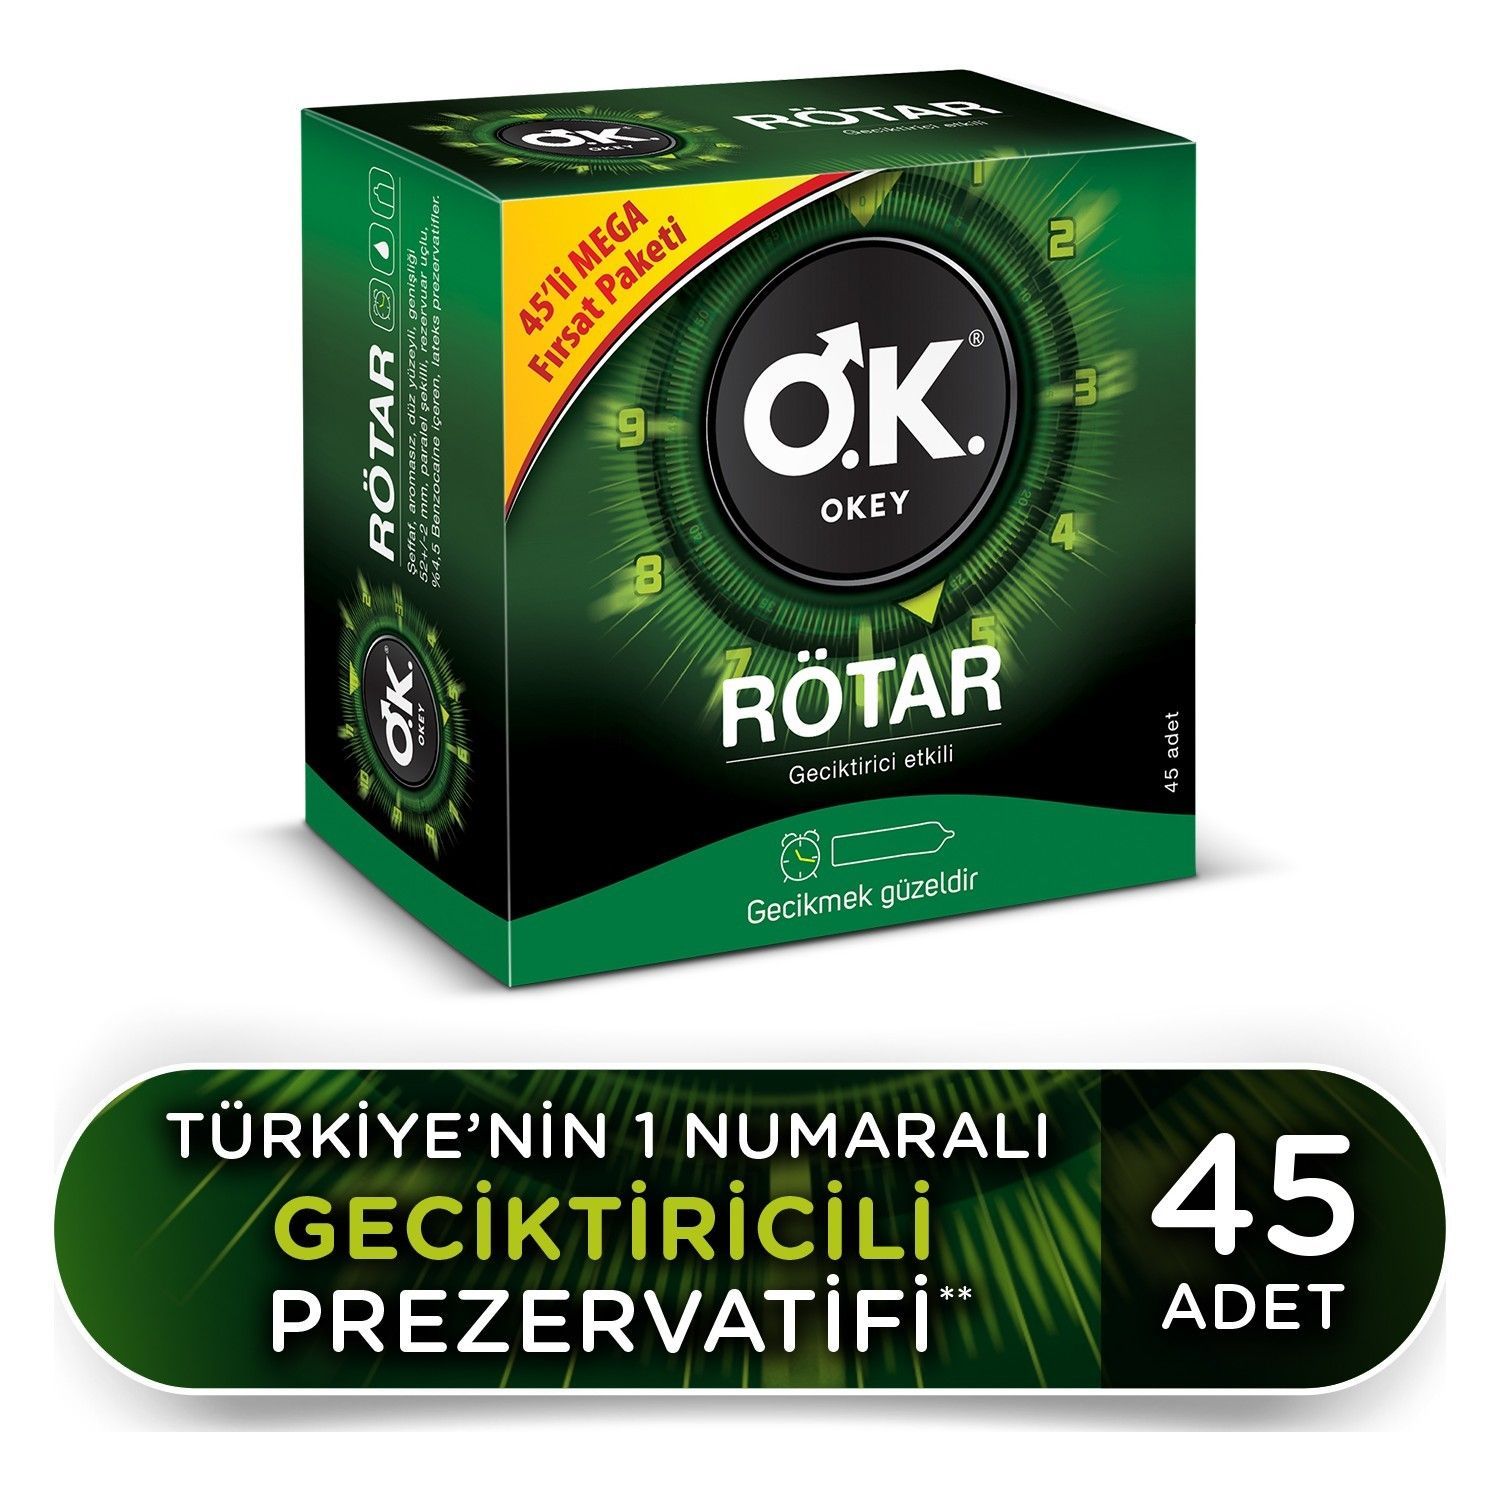 Презервативы Okey зеленая упаковка. Okey презервативы Размеры. Что такое Rotar ok. A 101 Prezarvatif.